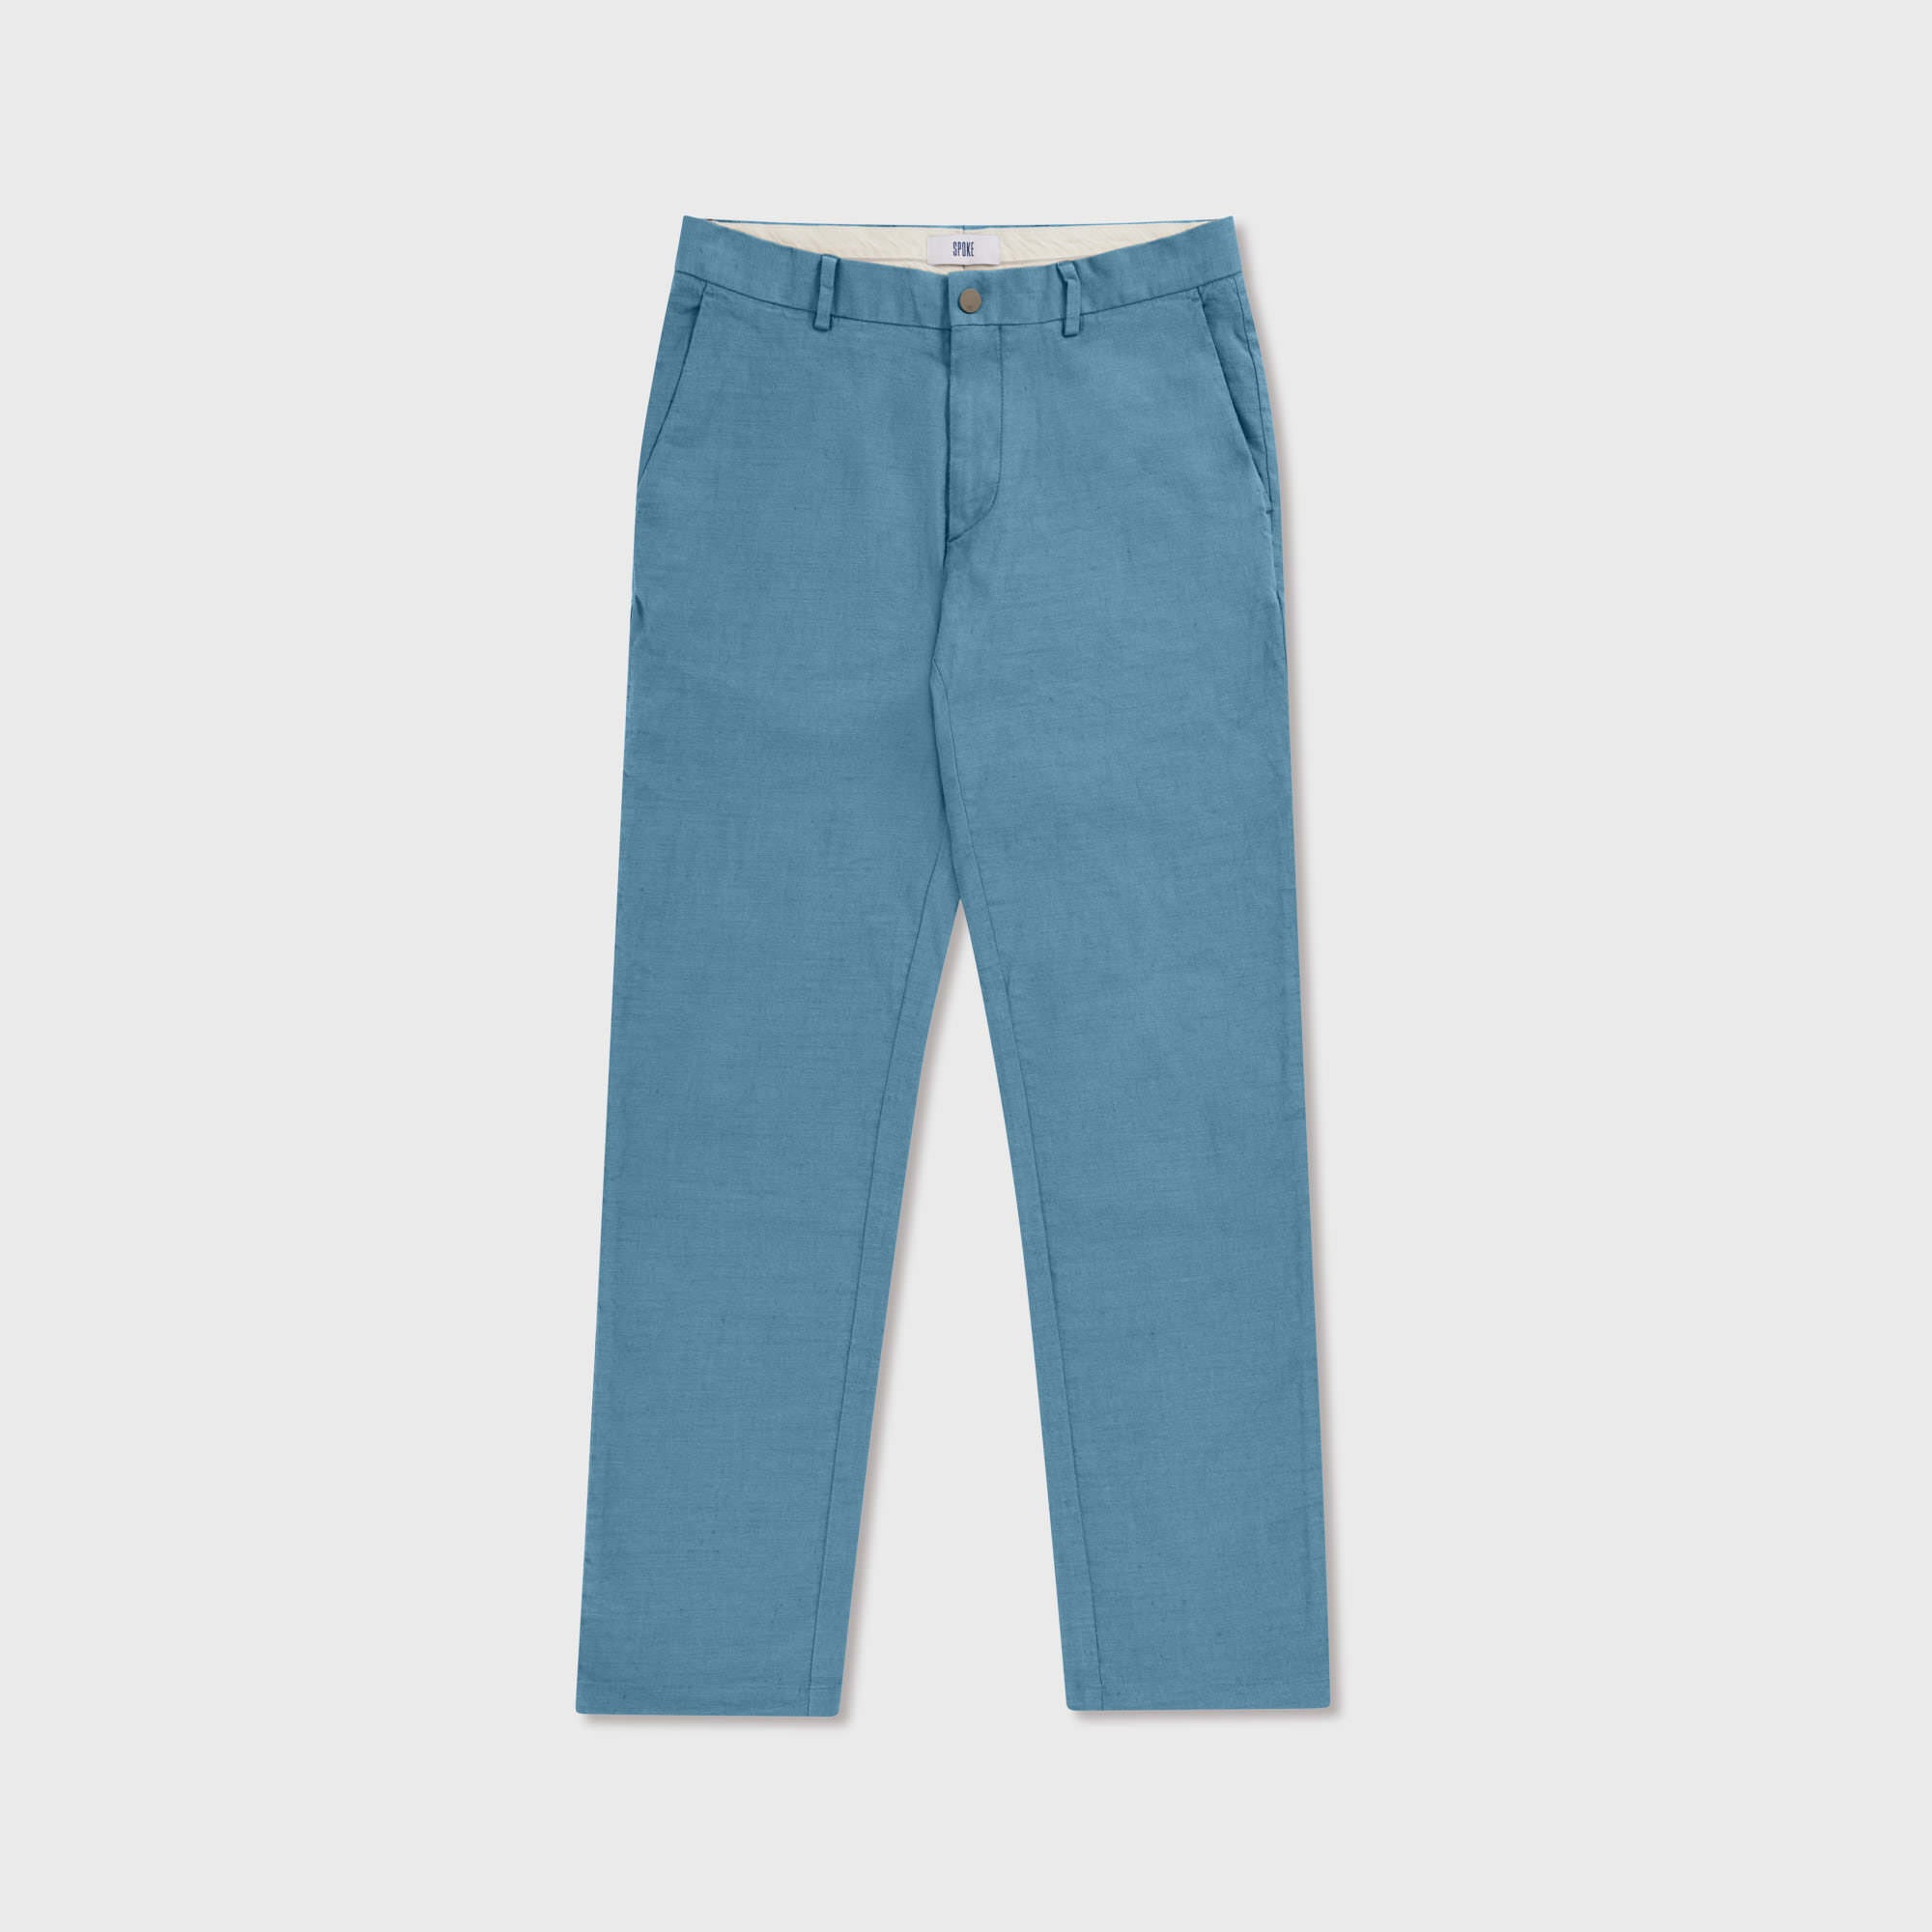 Aegean Blue - Sharps Everyday Men's Custom Fit Chino Pants - SPOKE - SPOKE